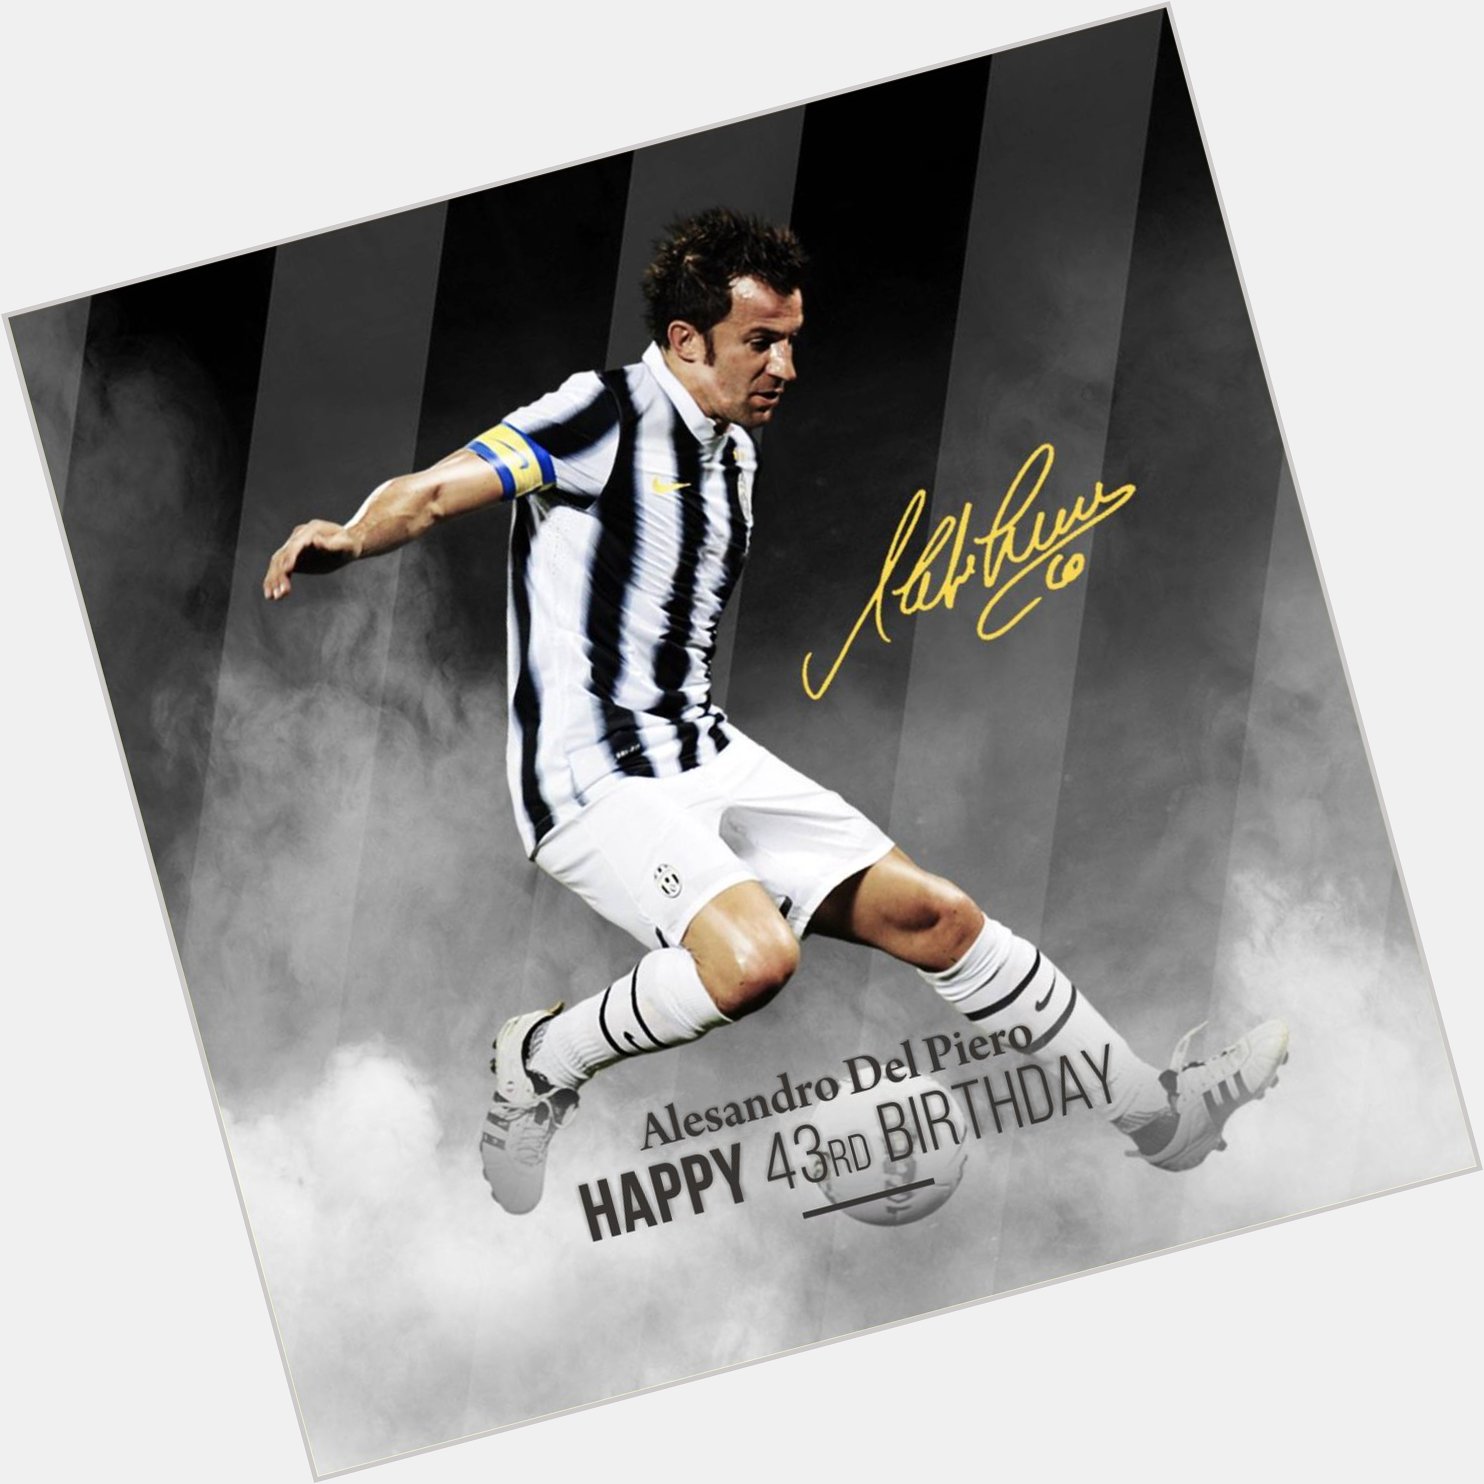 Happy birthday to Juventus legend Alessandro Del Piero, who turns 43 today. 

Games: 705 
Goals: 289 : 17 